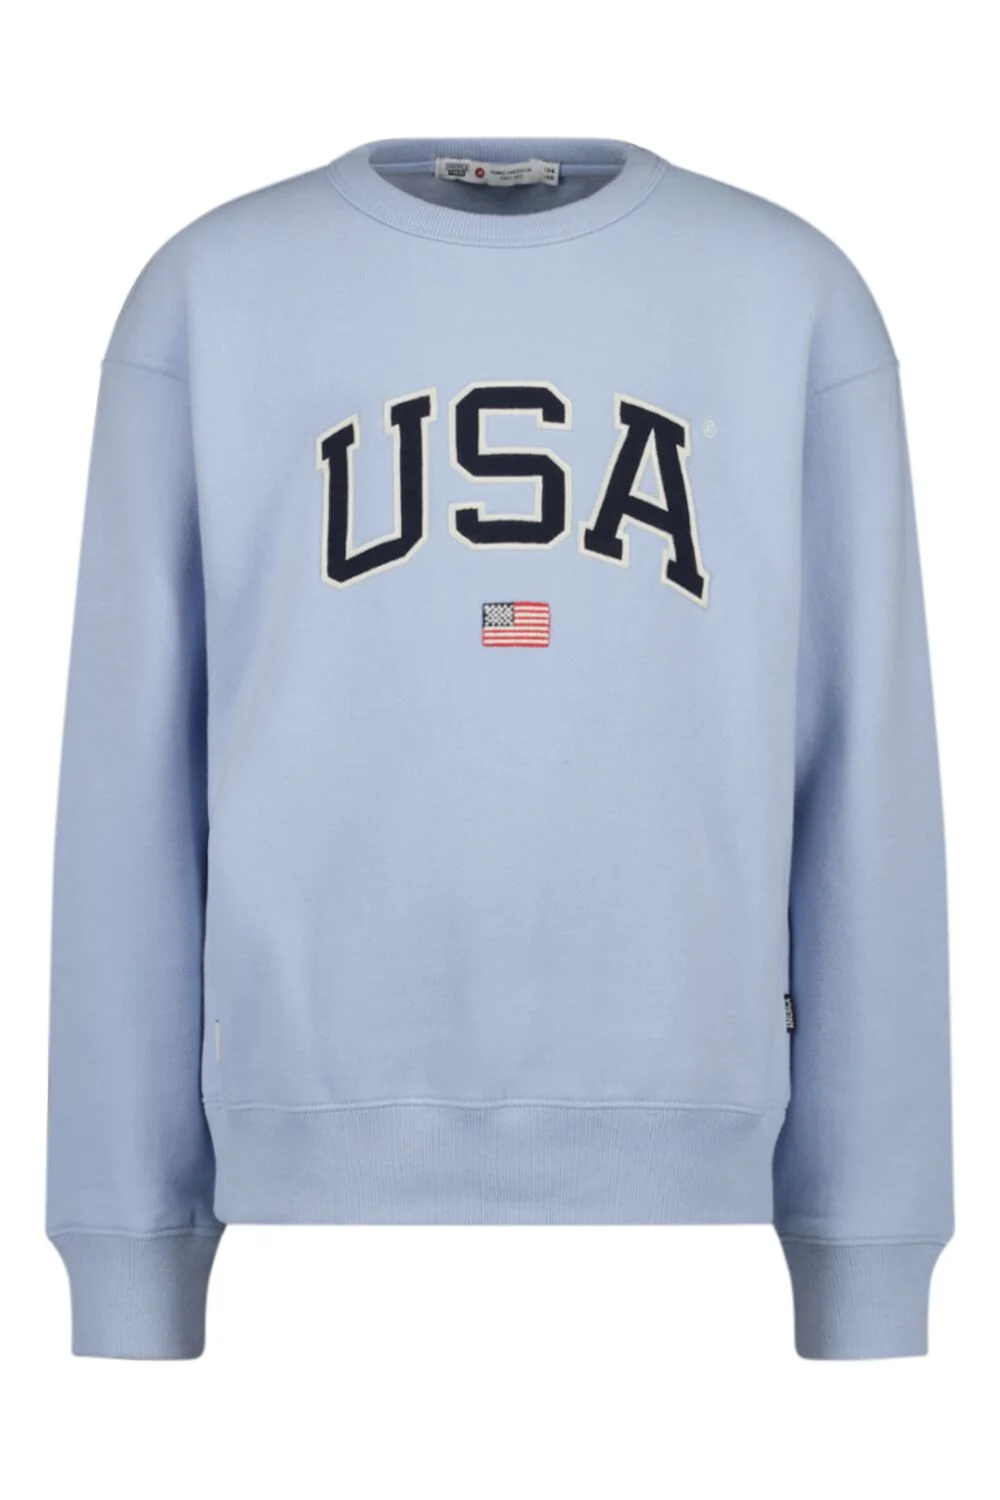 America Today Sweater soel jr